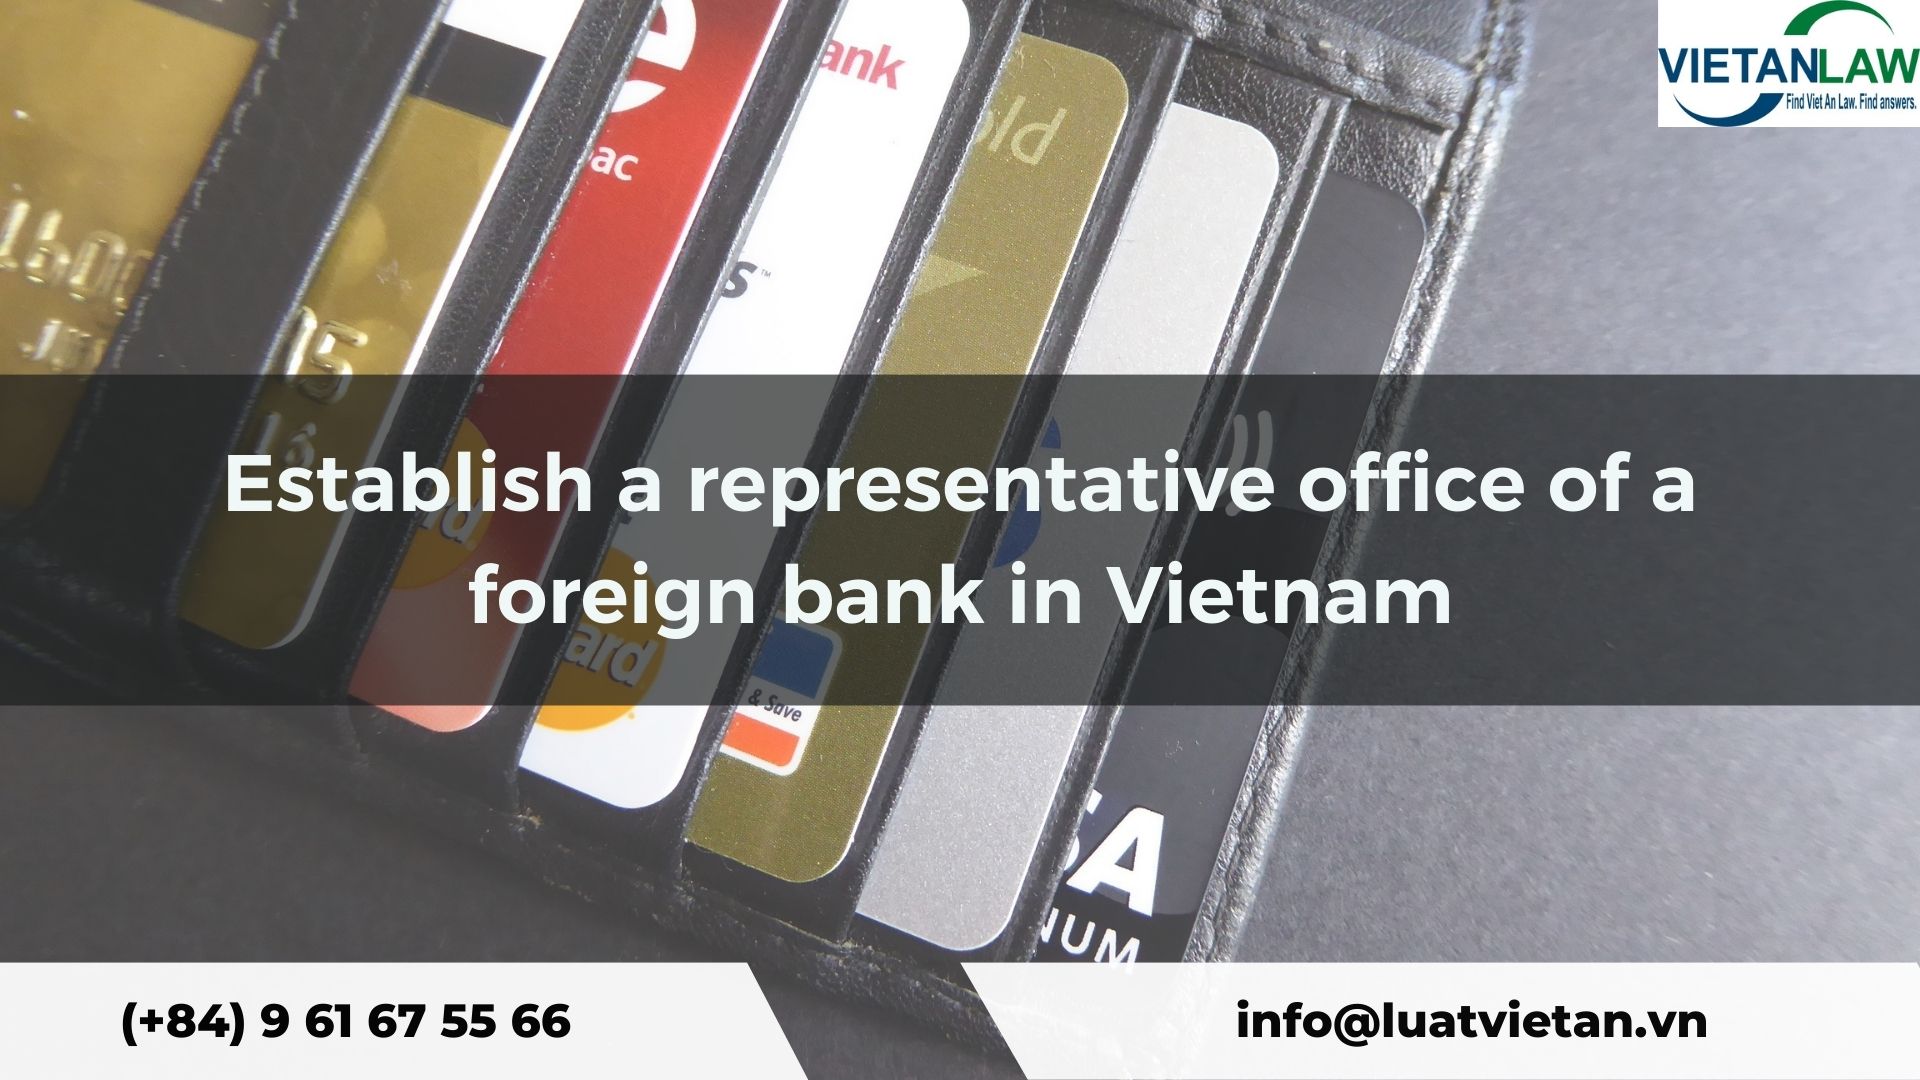 Establish a representative office of a foreign bank in Vietnam